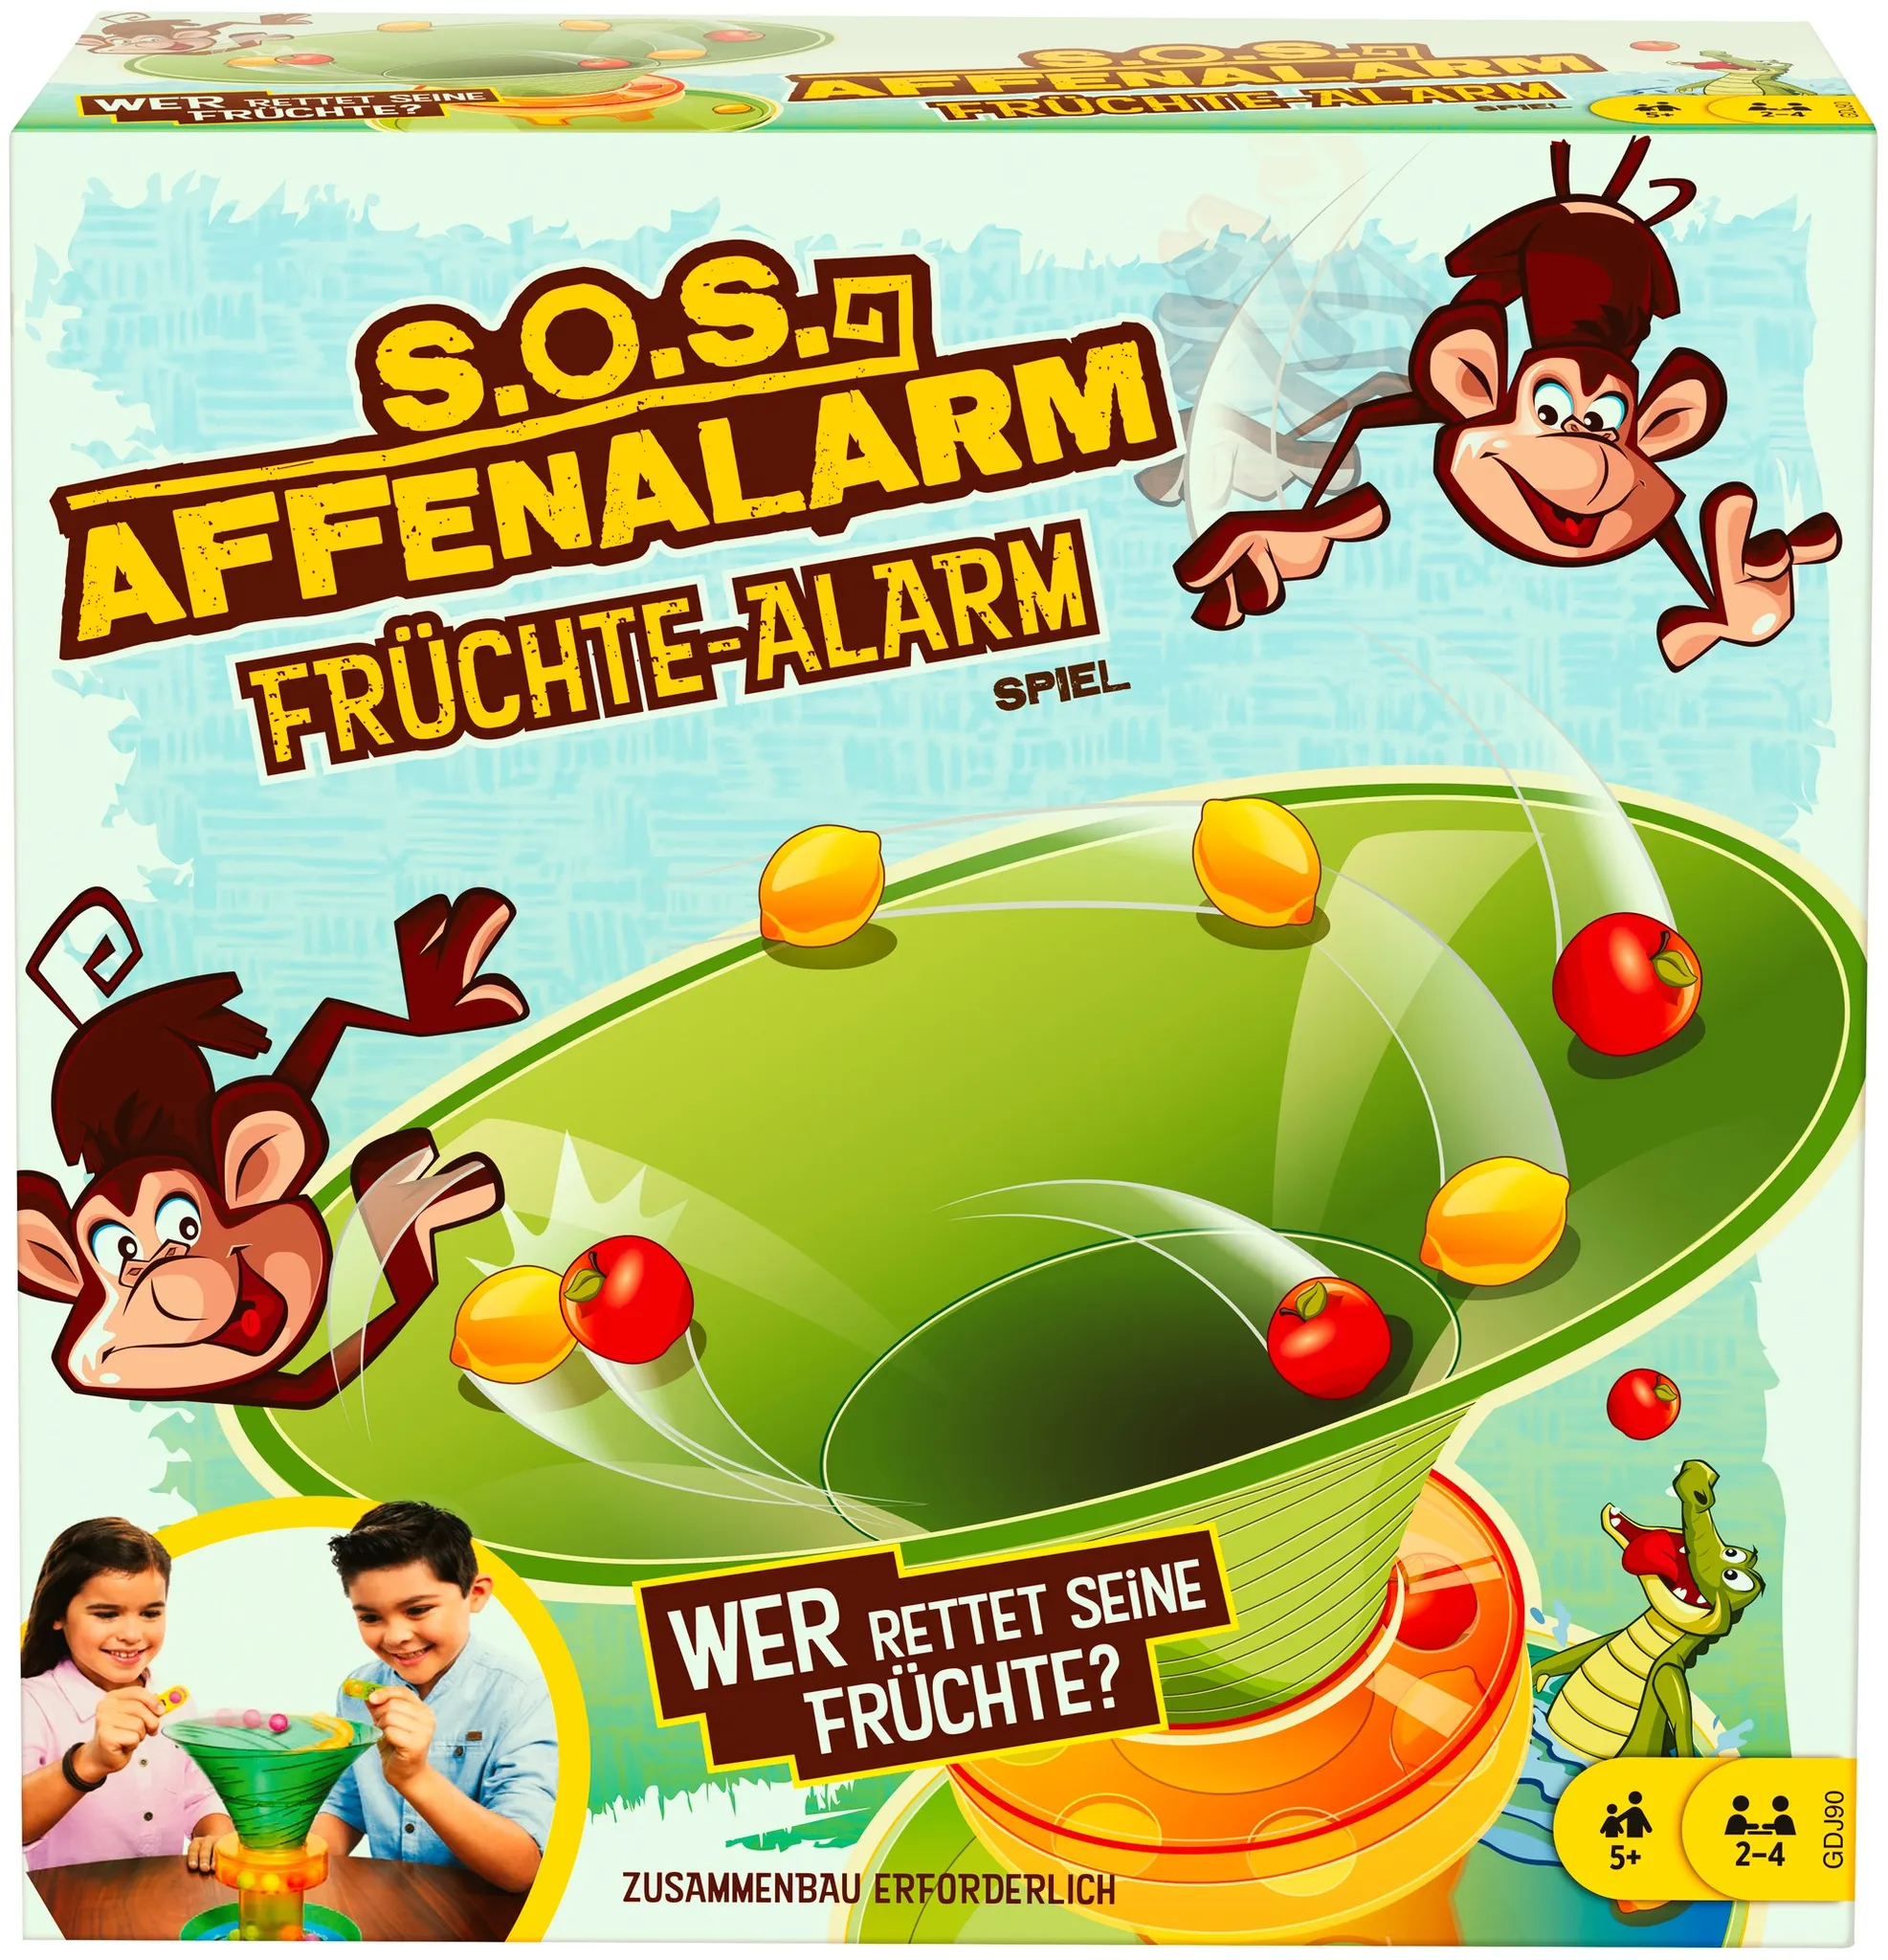 Früchte-Alarm Mattel Affenalarm Games S.O.S.